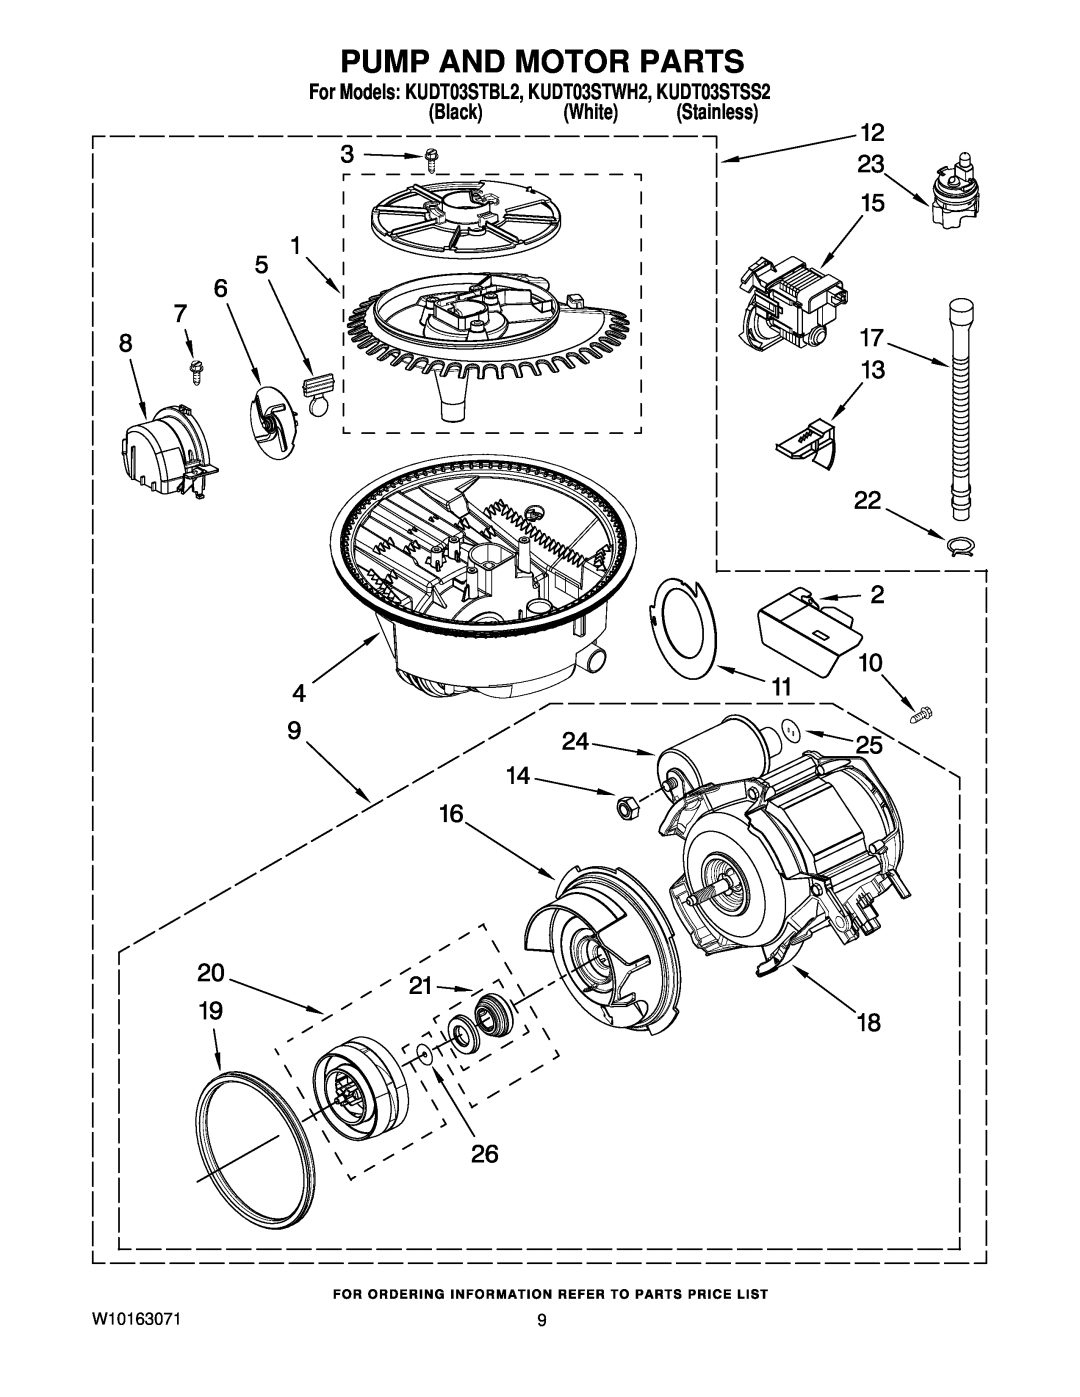 KitchenAid manual Pump And Motor Parts, Black, For Models KUDT03STBL2, KUDT03STWH2, KUDT03STSS2, White, Stainless 